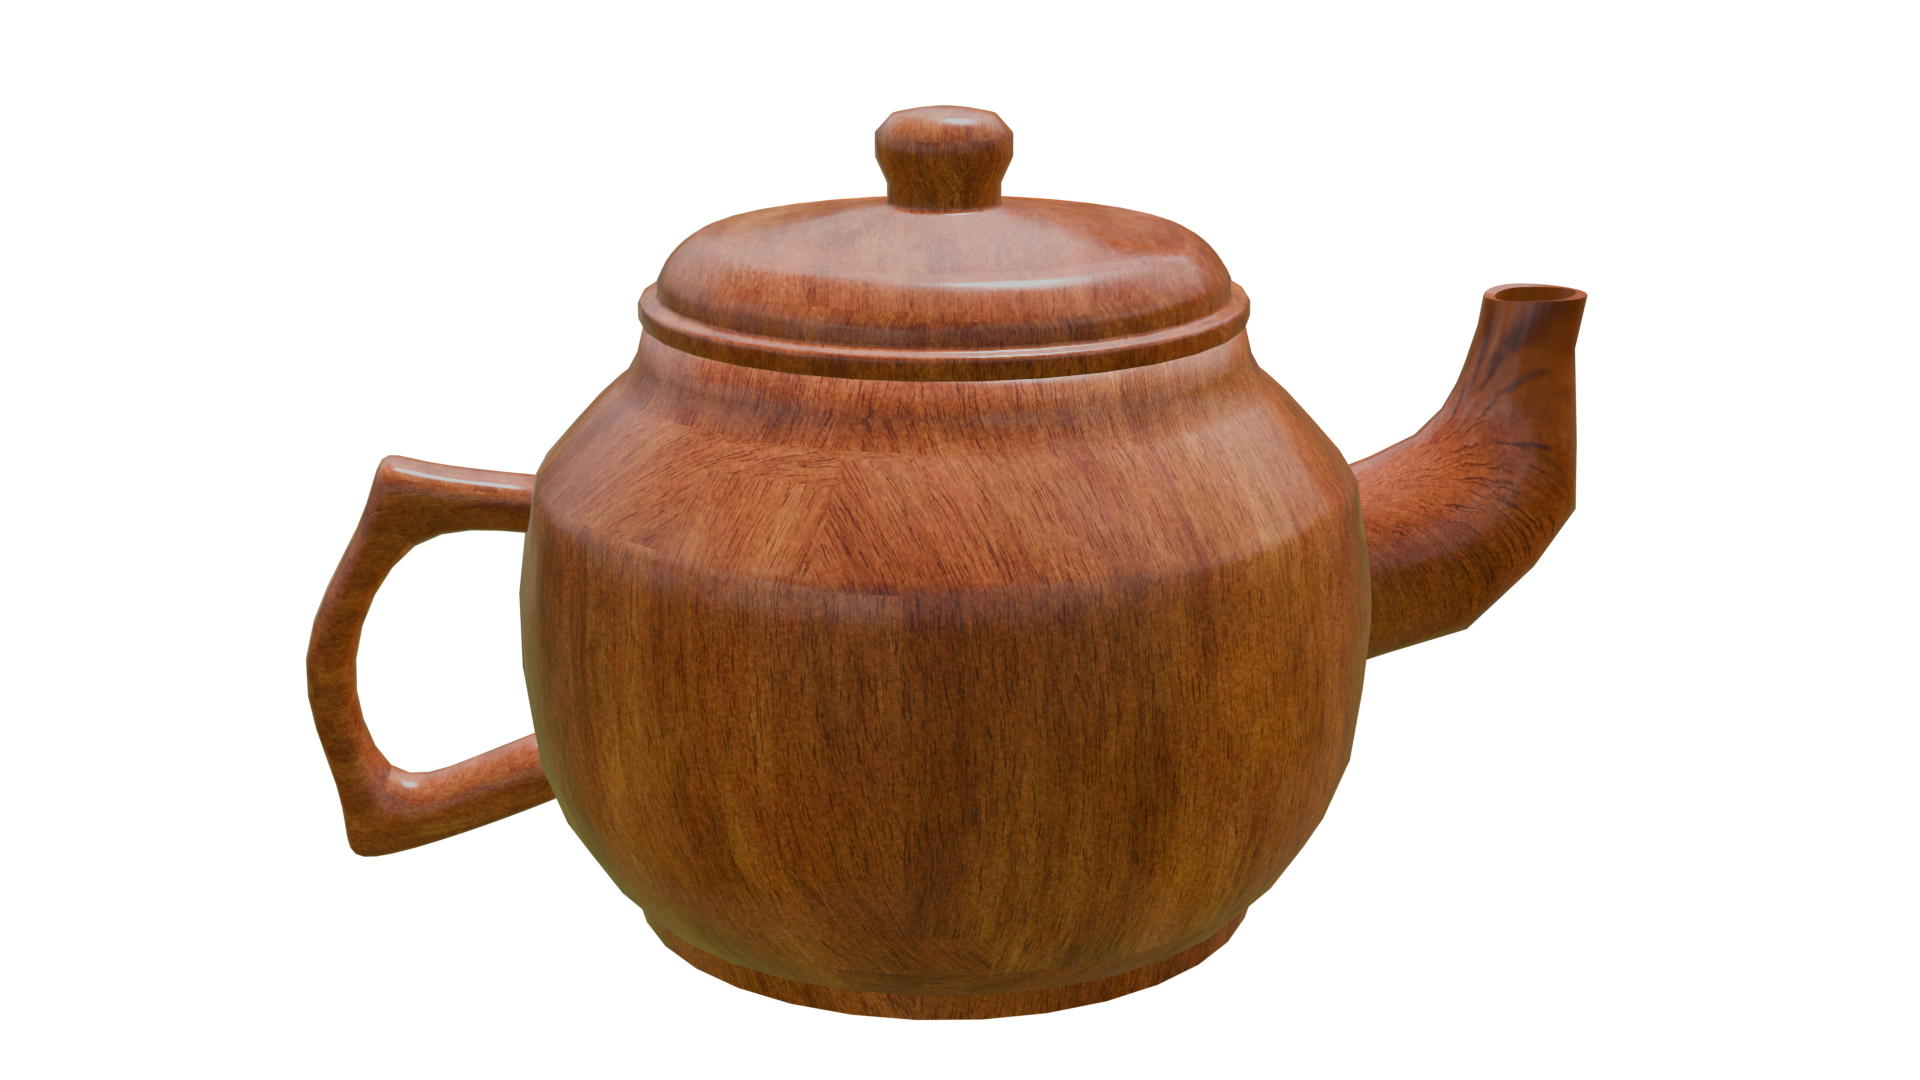 I modeled a tea pot today